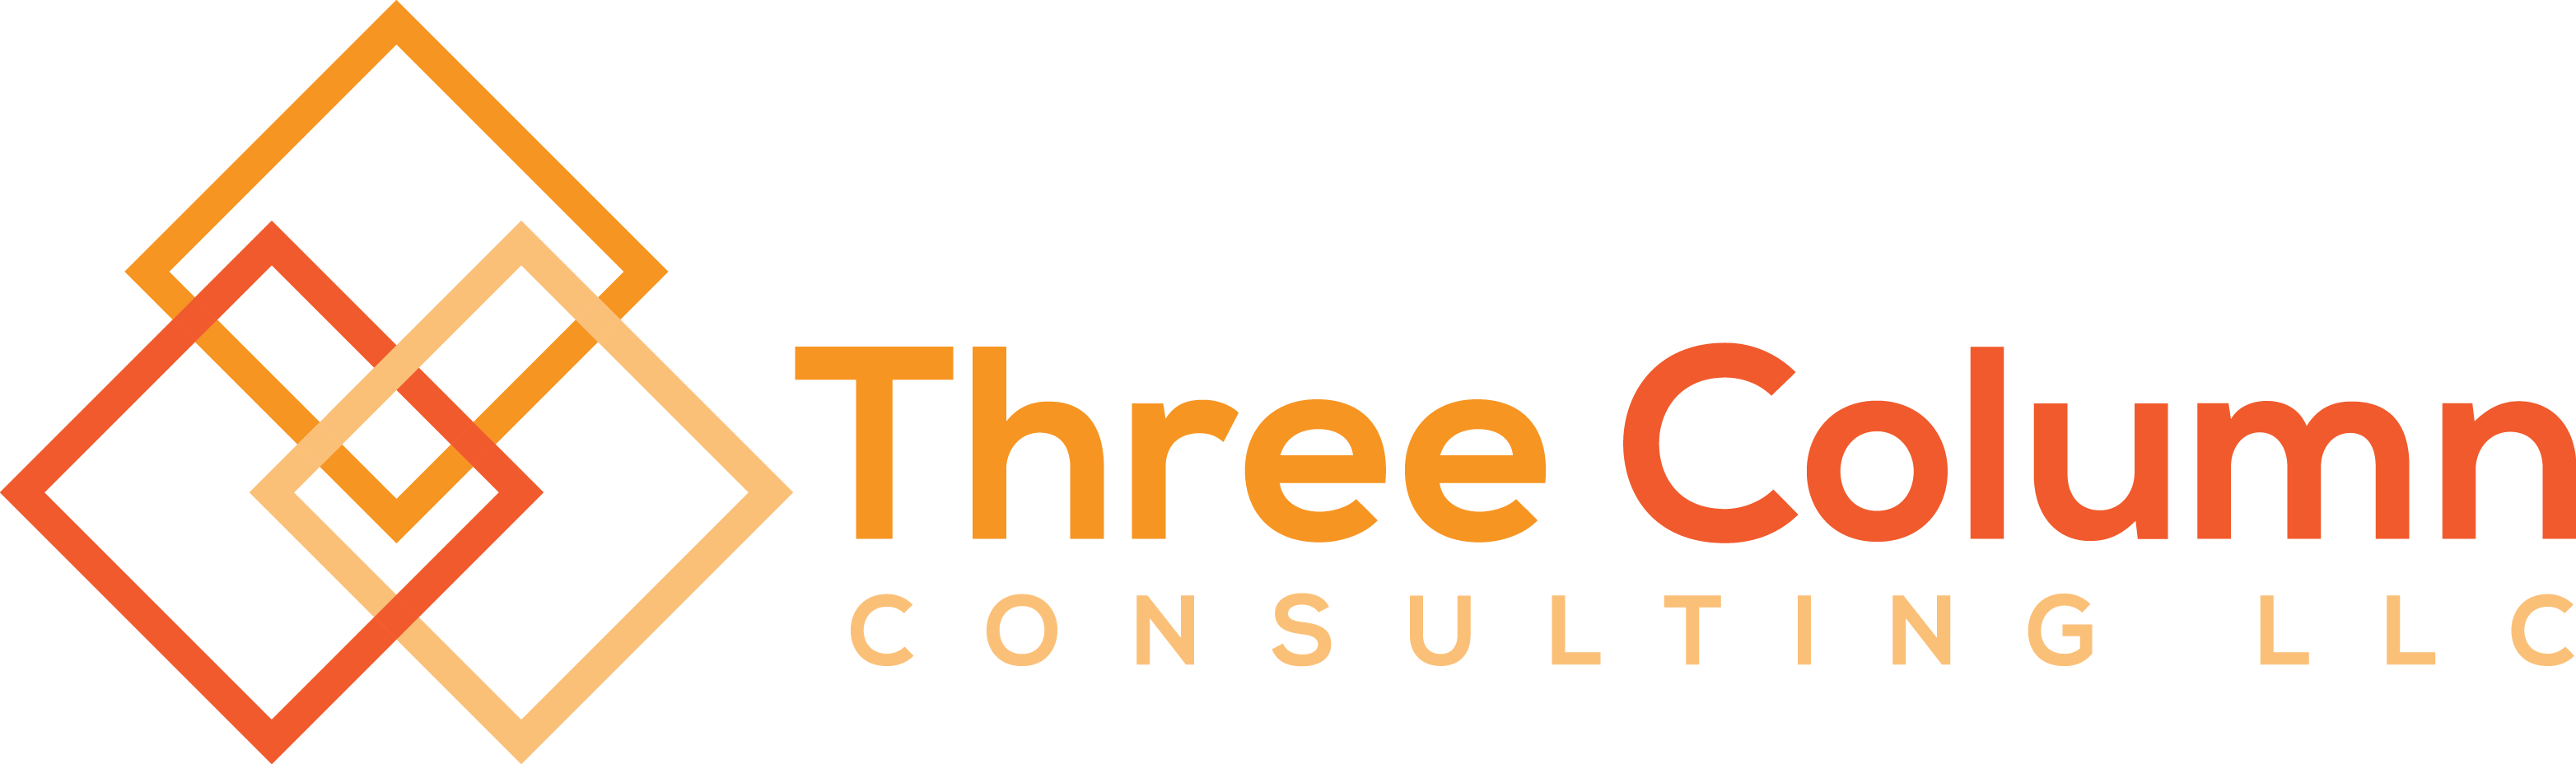 Three Column Consulting LLC.